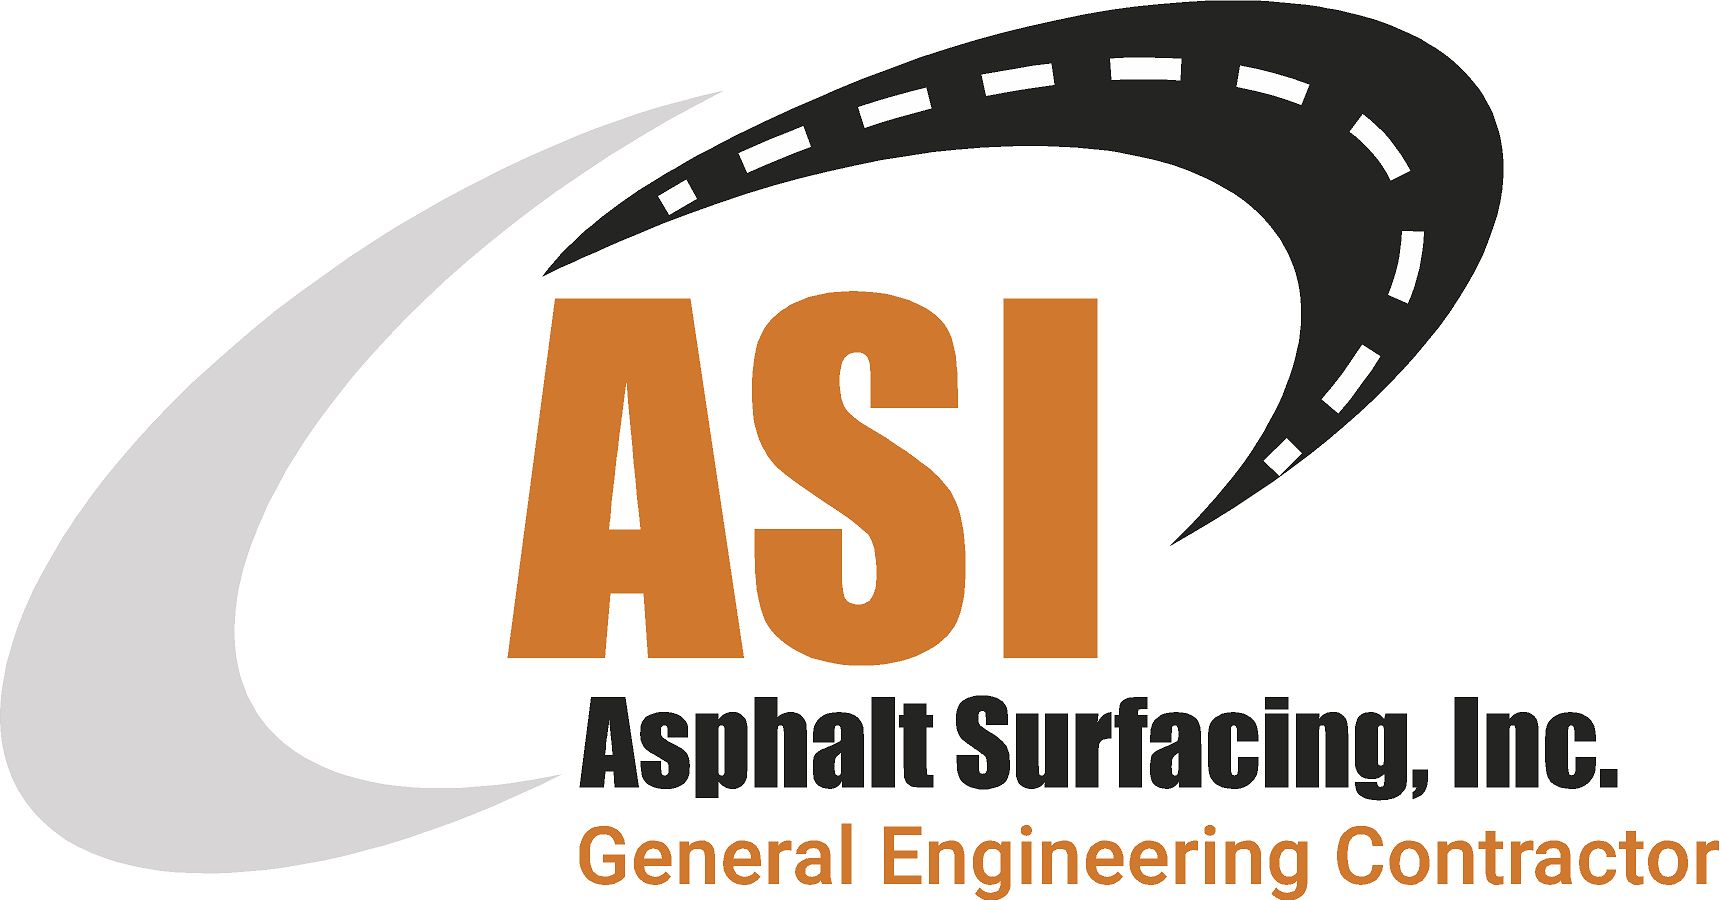 Asphalt Surfacing, Inc. logo